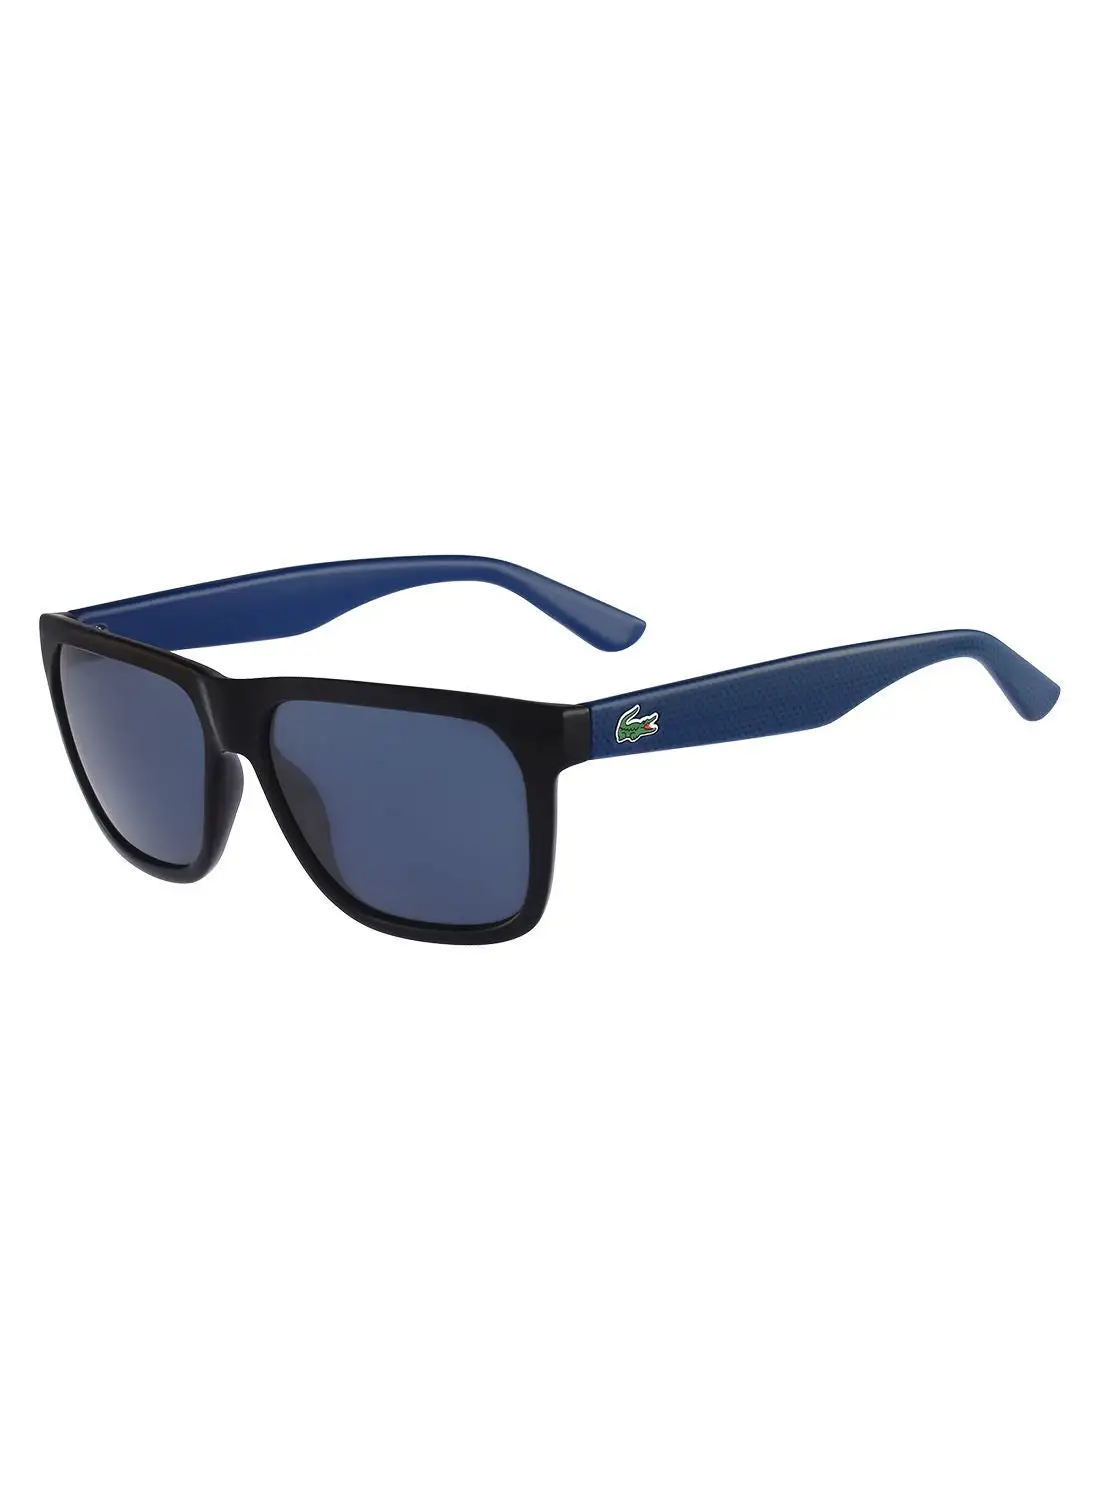 LACOSTE Unisex Rectangular Shape Sunglasses - 24570-001-5615 - Lens Size: 56 mm